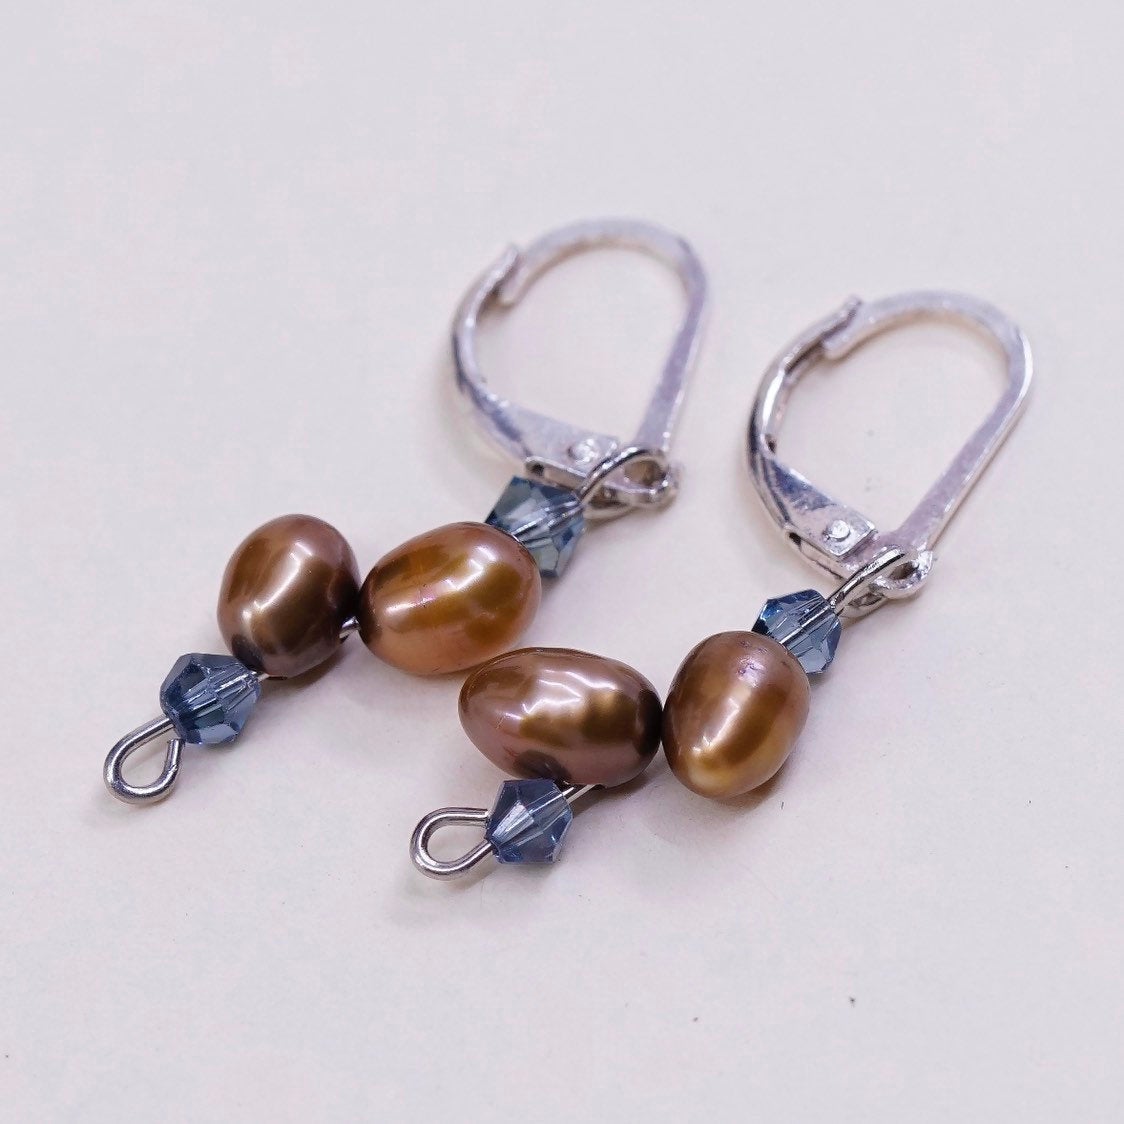 VTG Sterling silver handmade earrings, 925 hooks w/ golden pearl drops